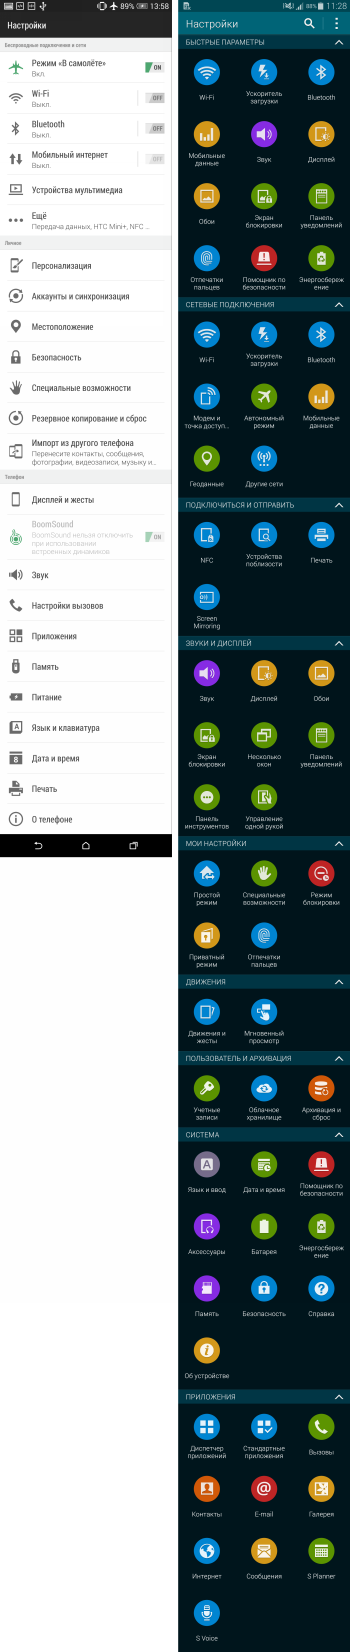  HTC One M8 and Samsung Galaxy S5 settings menu comparison 